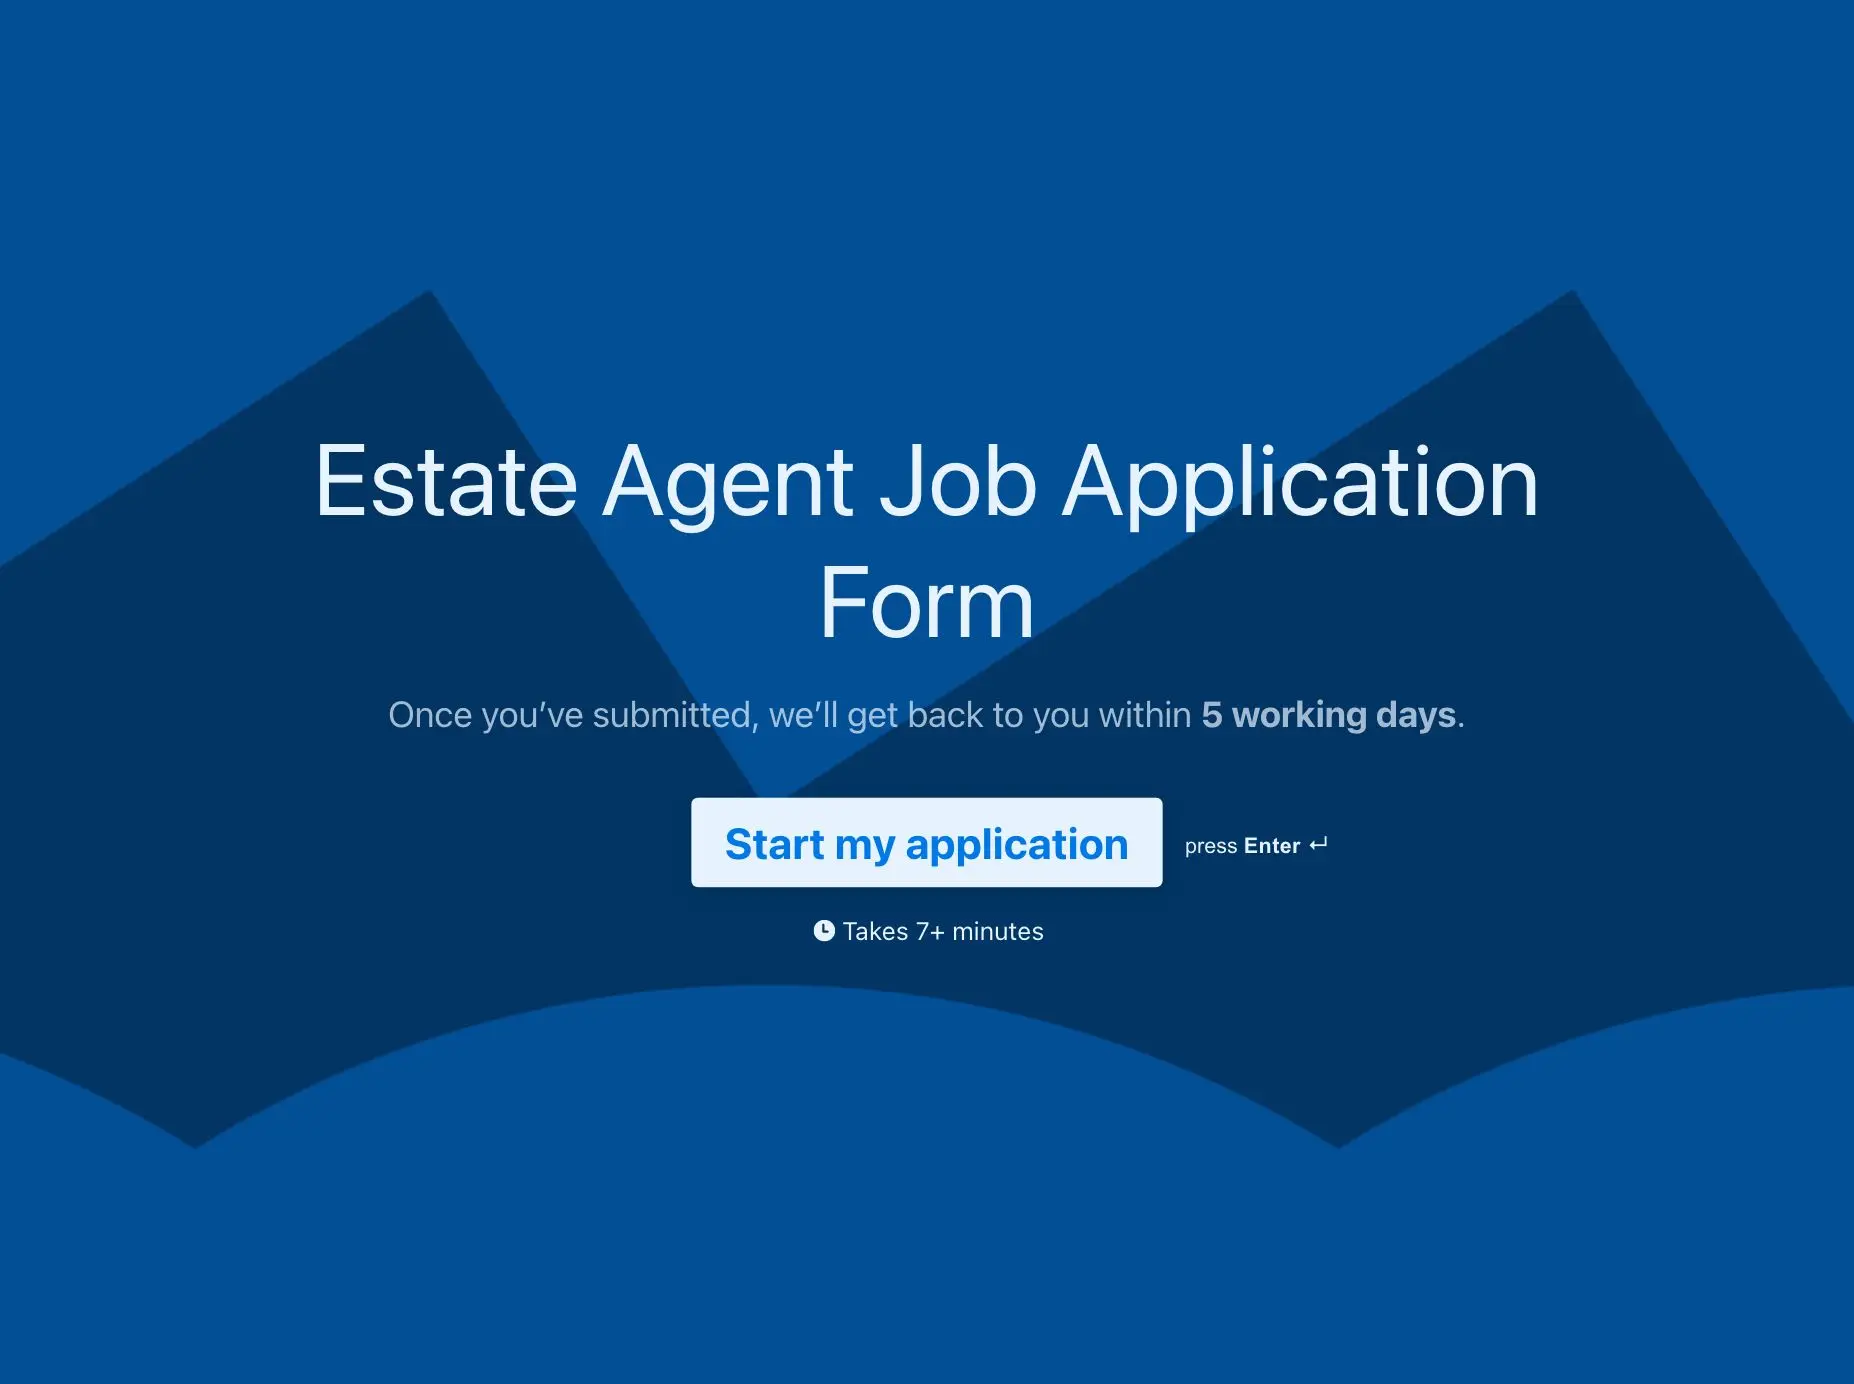 Estate Agent Job Application Form Template Hero